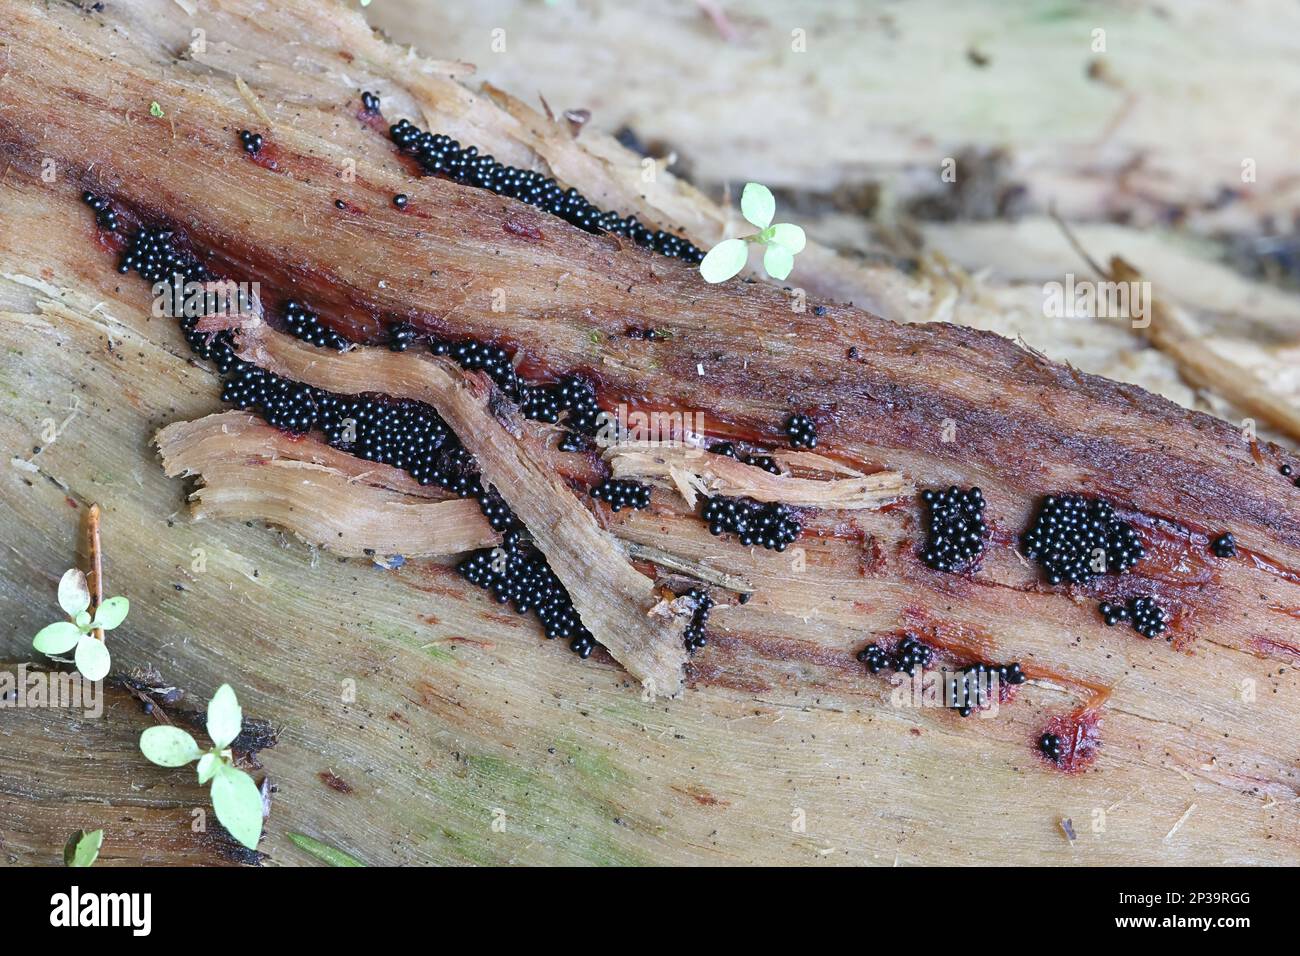 Wasp nest slime mold, Metatrichia vesparium Stock Photo